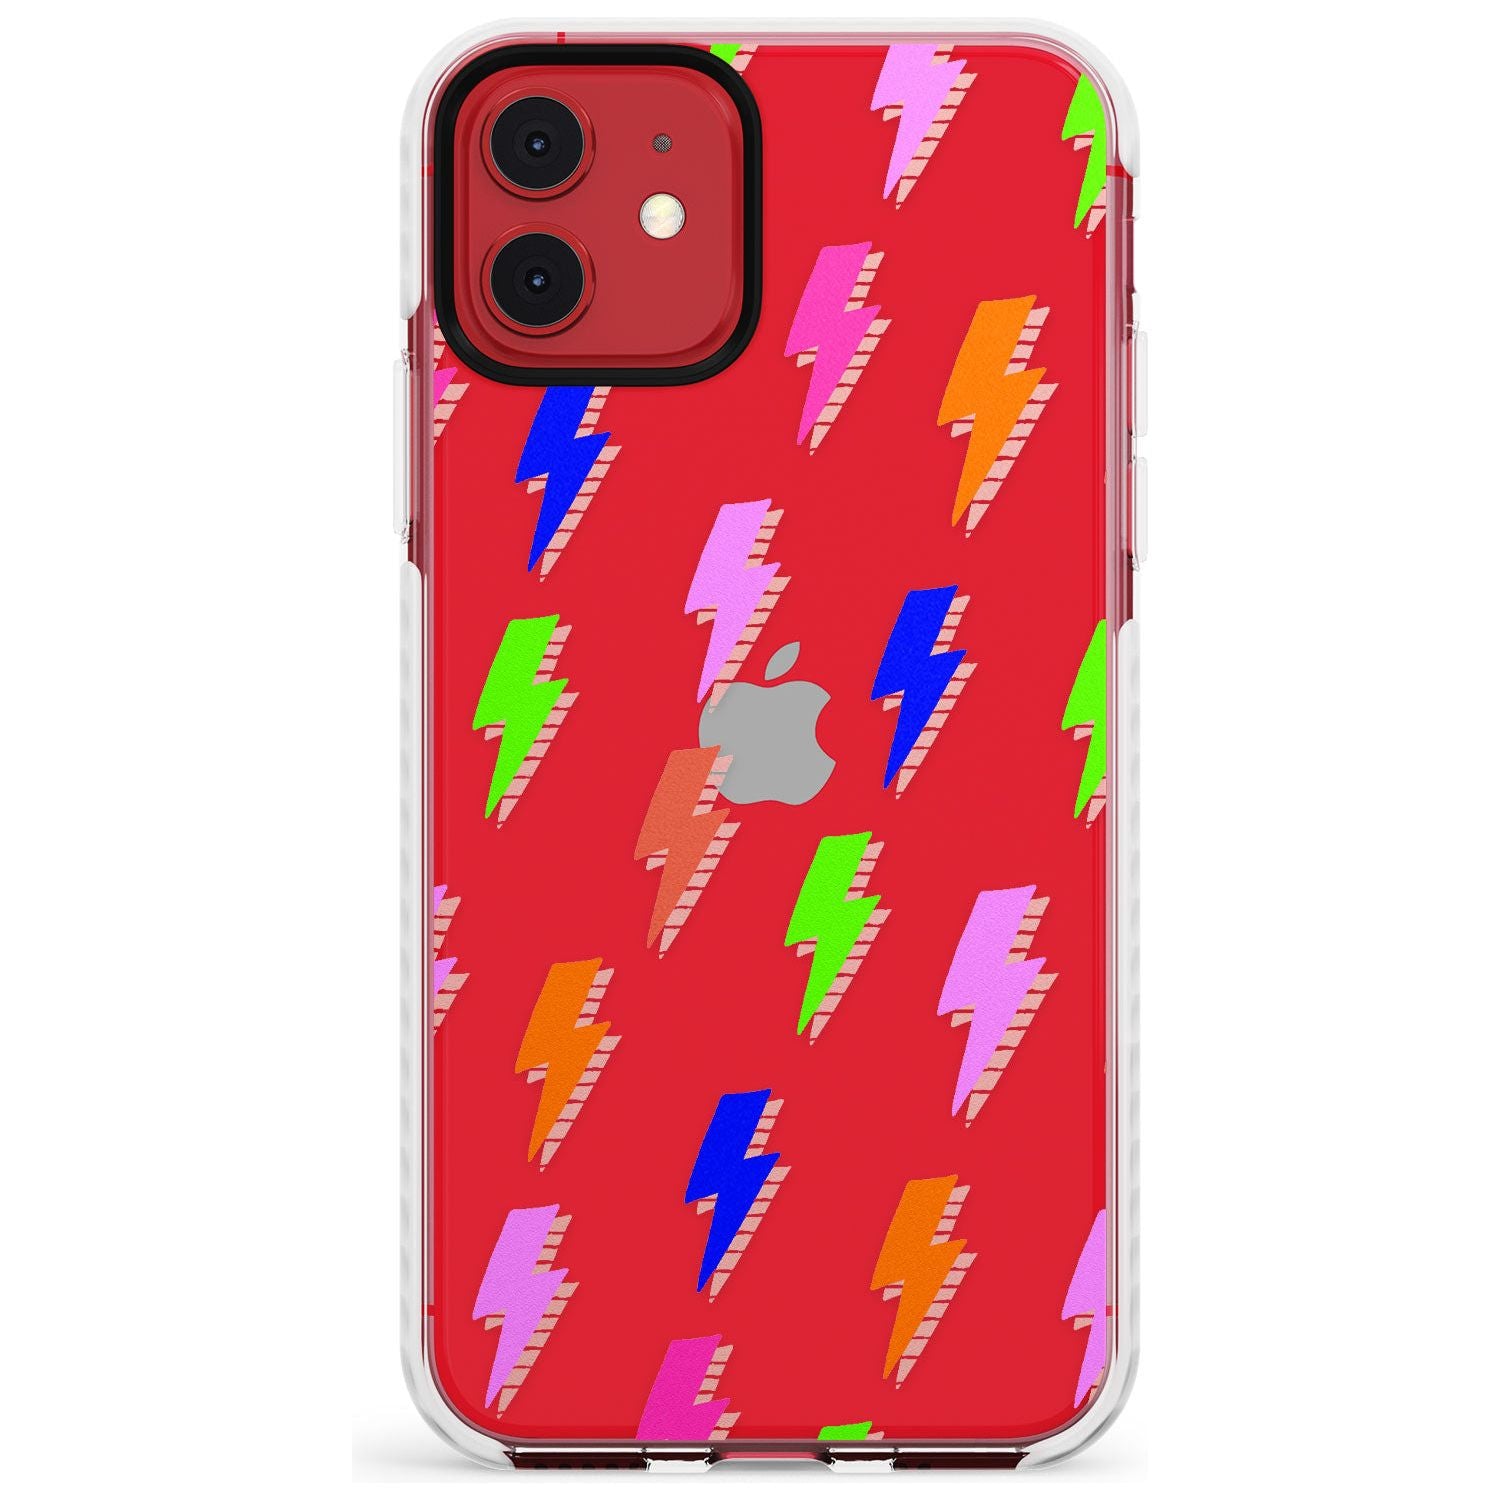 Rainbow Pop Lightning Slim TPU Phone Case for iPhone 11